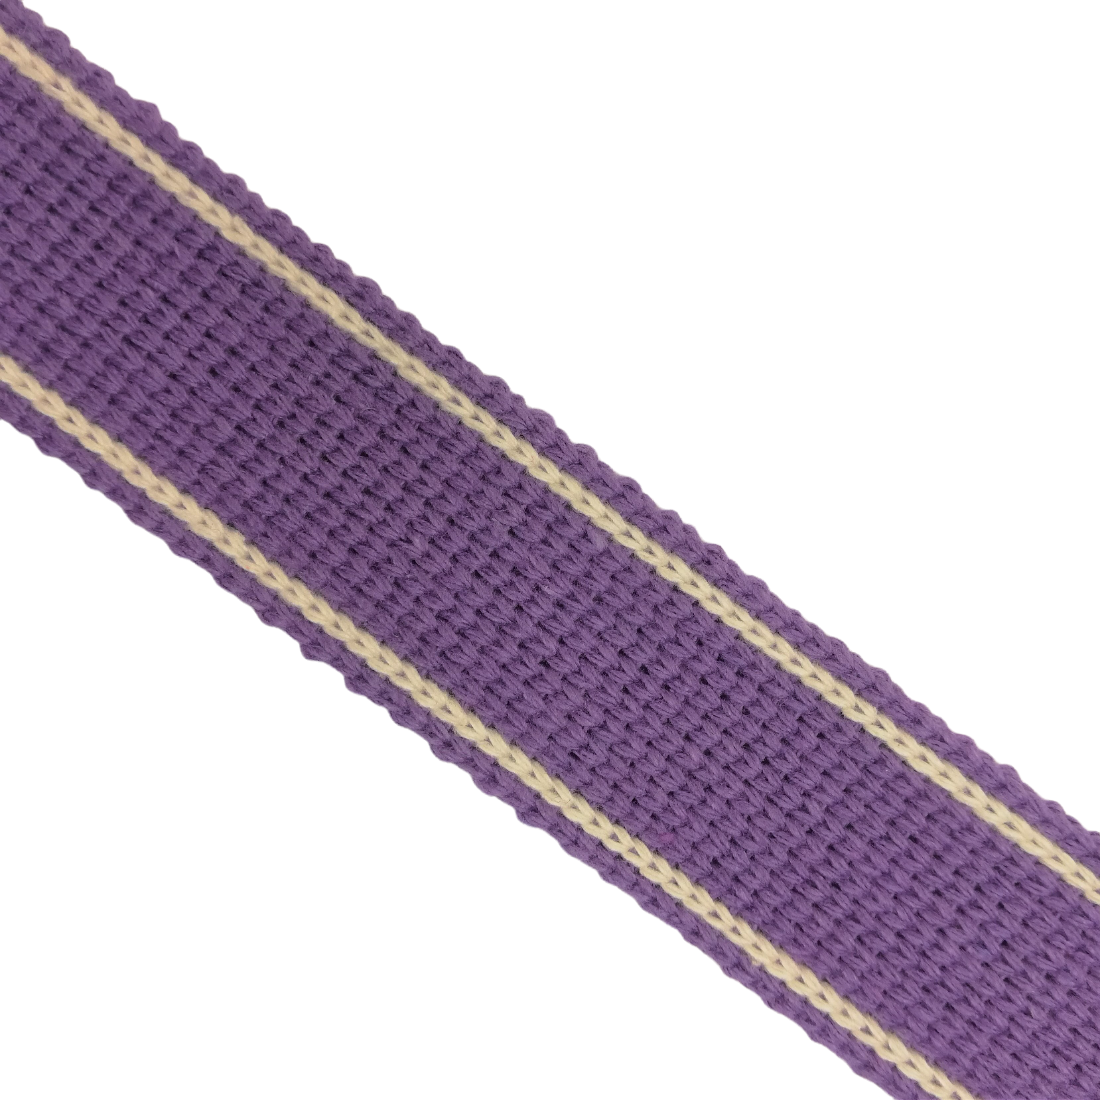 Bag Webbing - 30mm Cotton Blend with Ecru Stripe in Lupin Purple